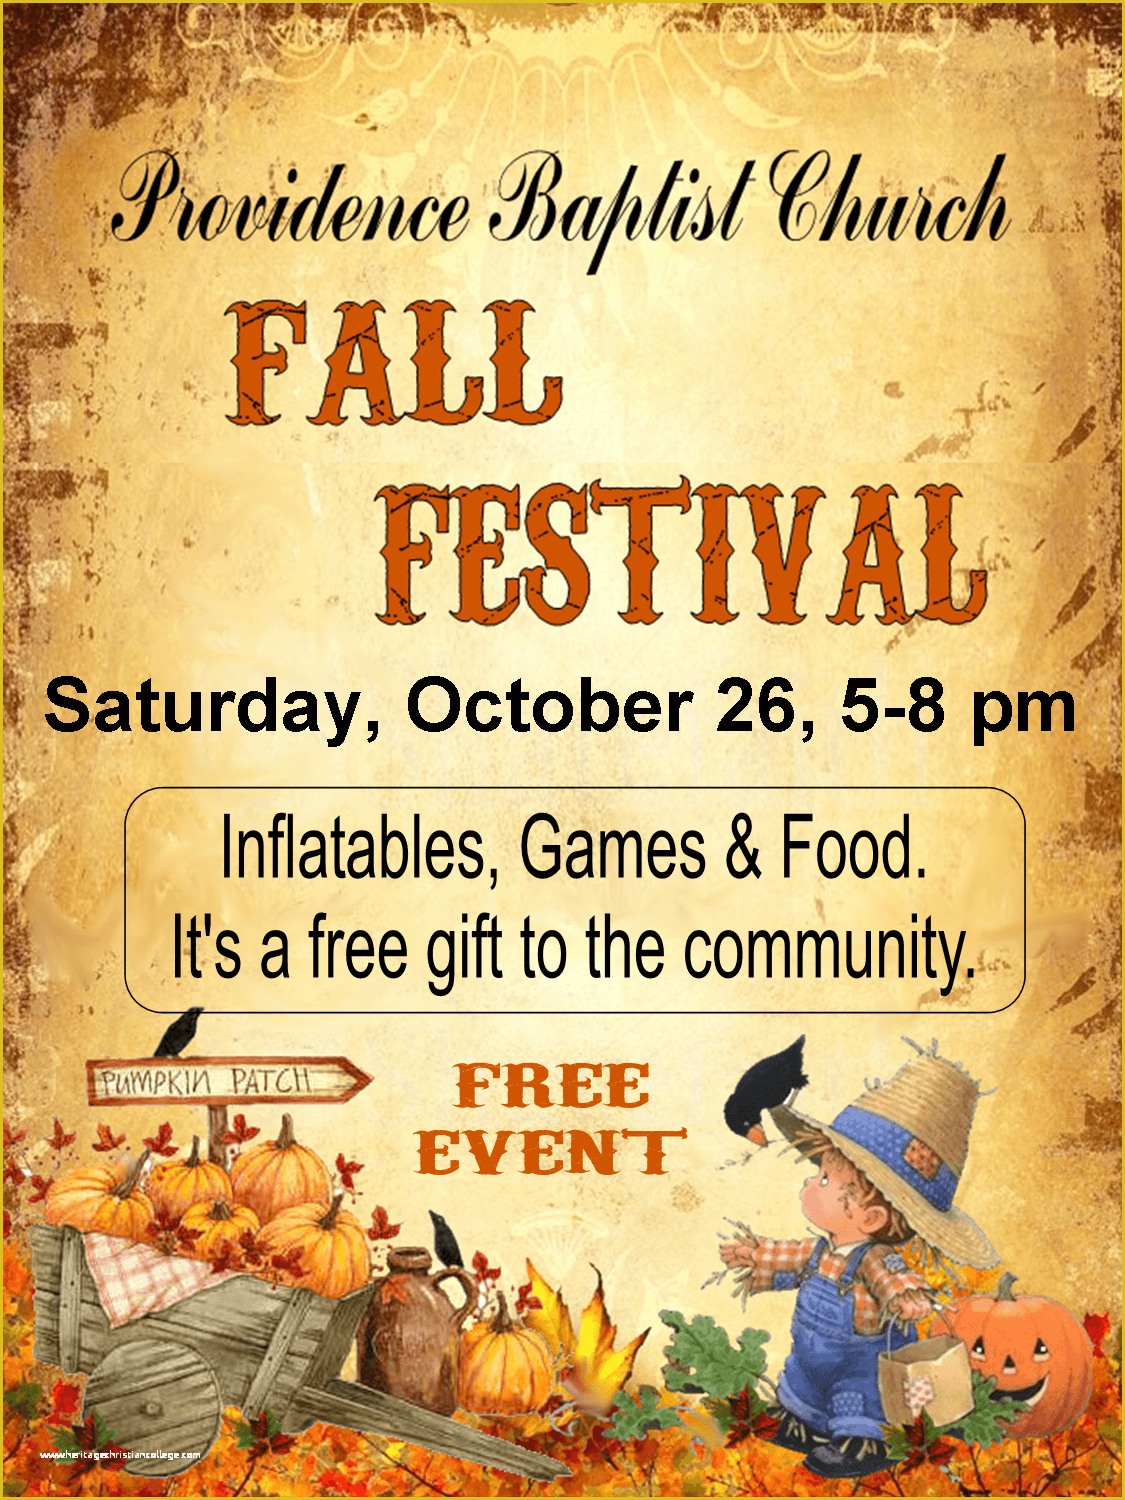 Free Printable Fall Festival Flyer Templates Of Providence Baptist